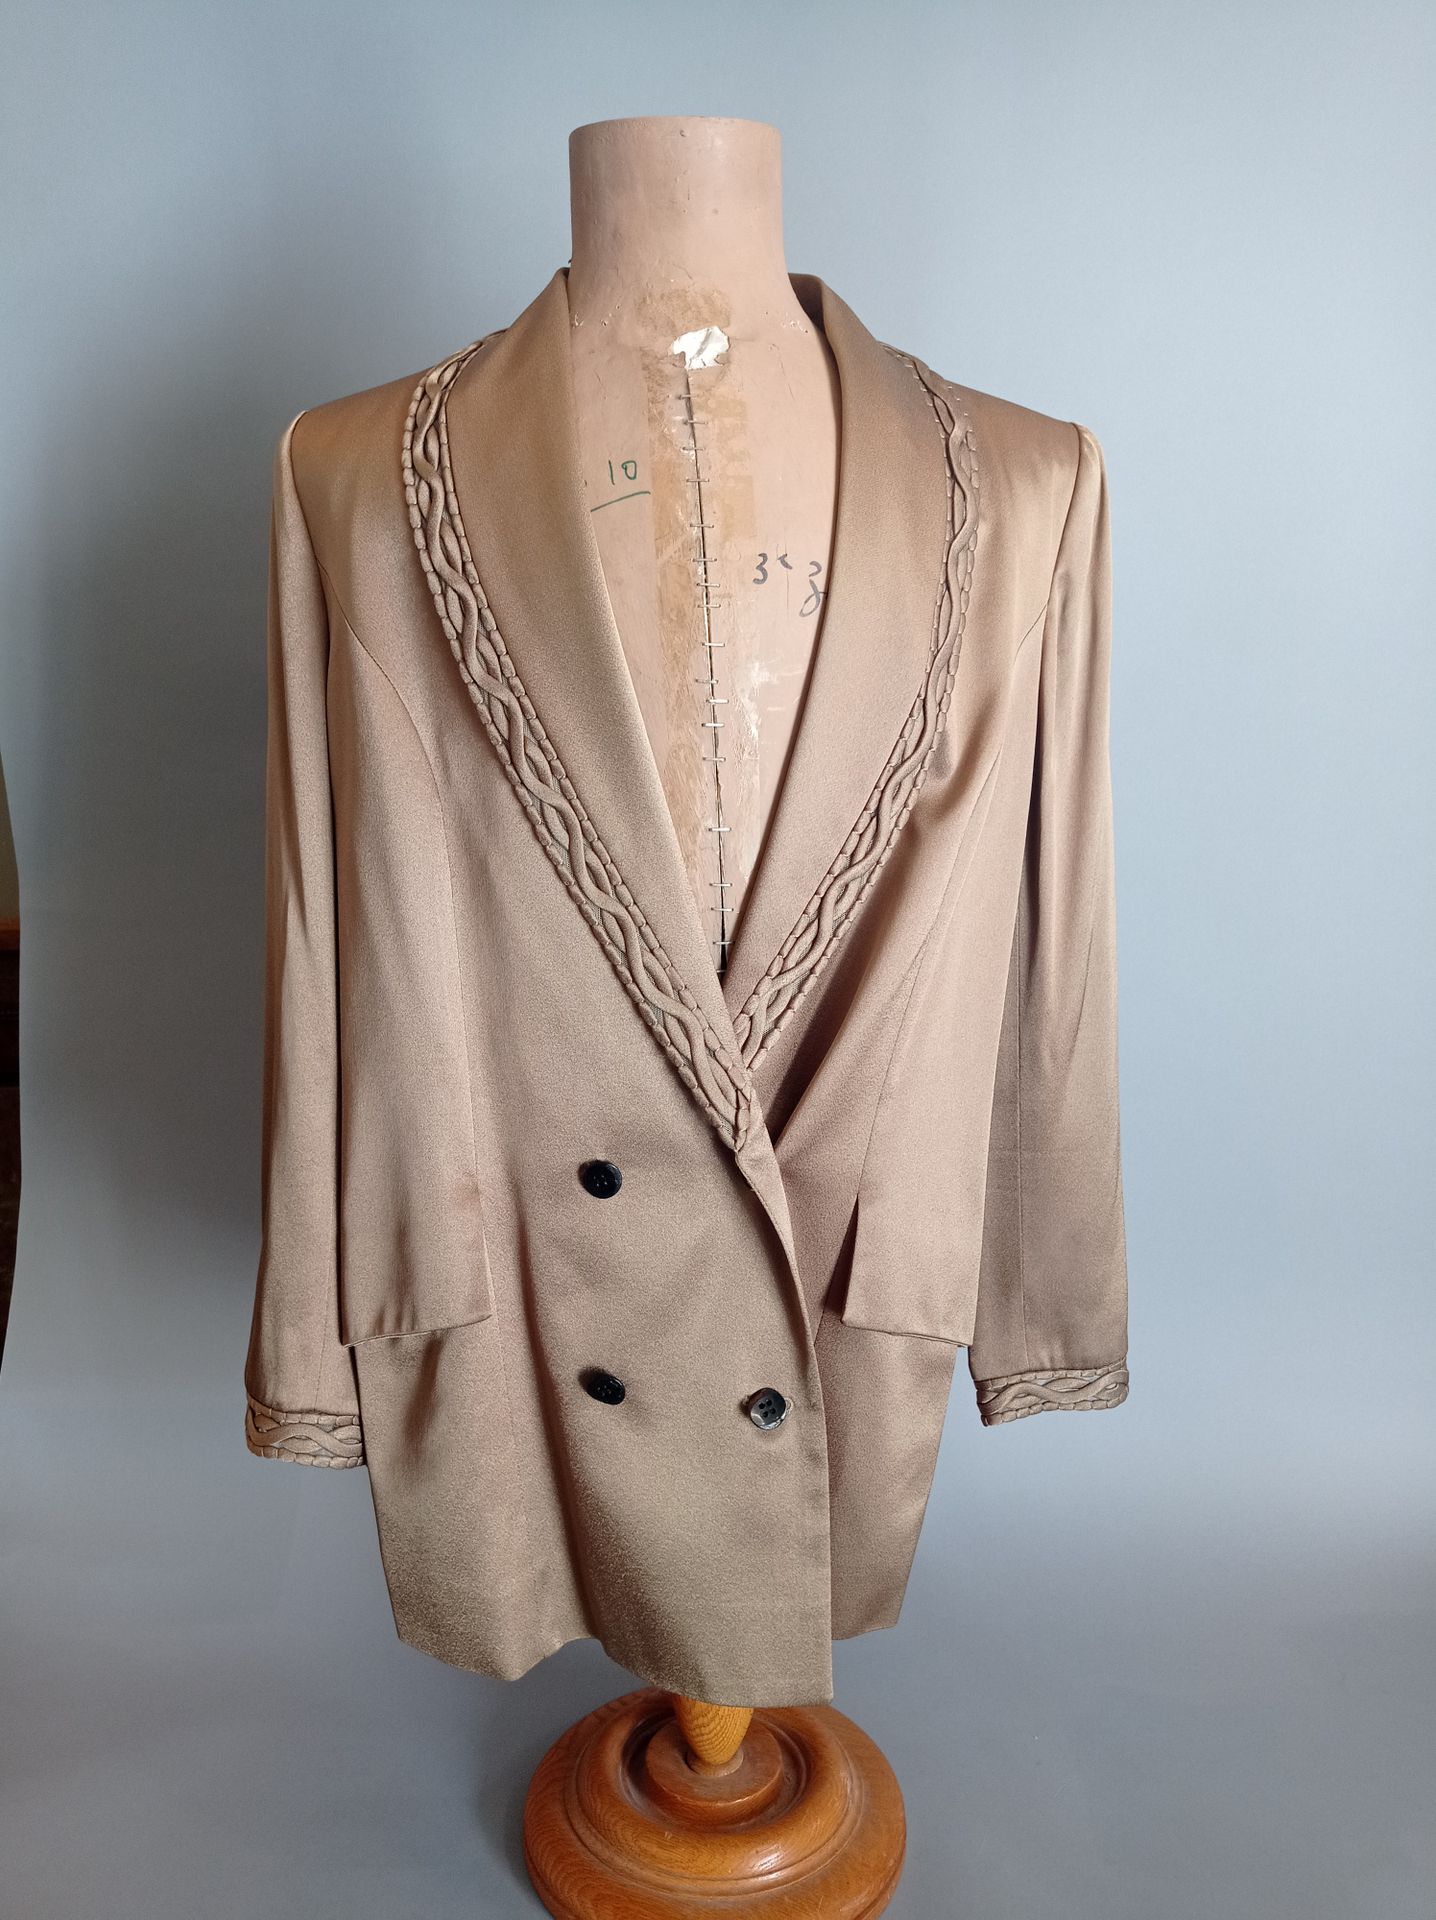 Christian DIOR Boutique Suit jacket pants, braided collar
Size 42